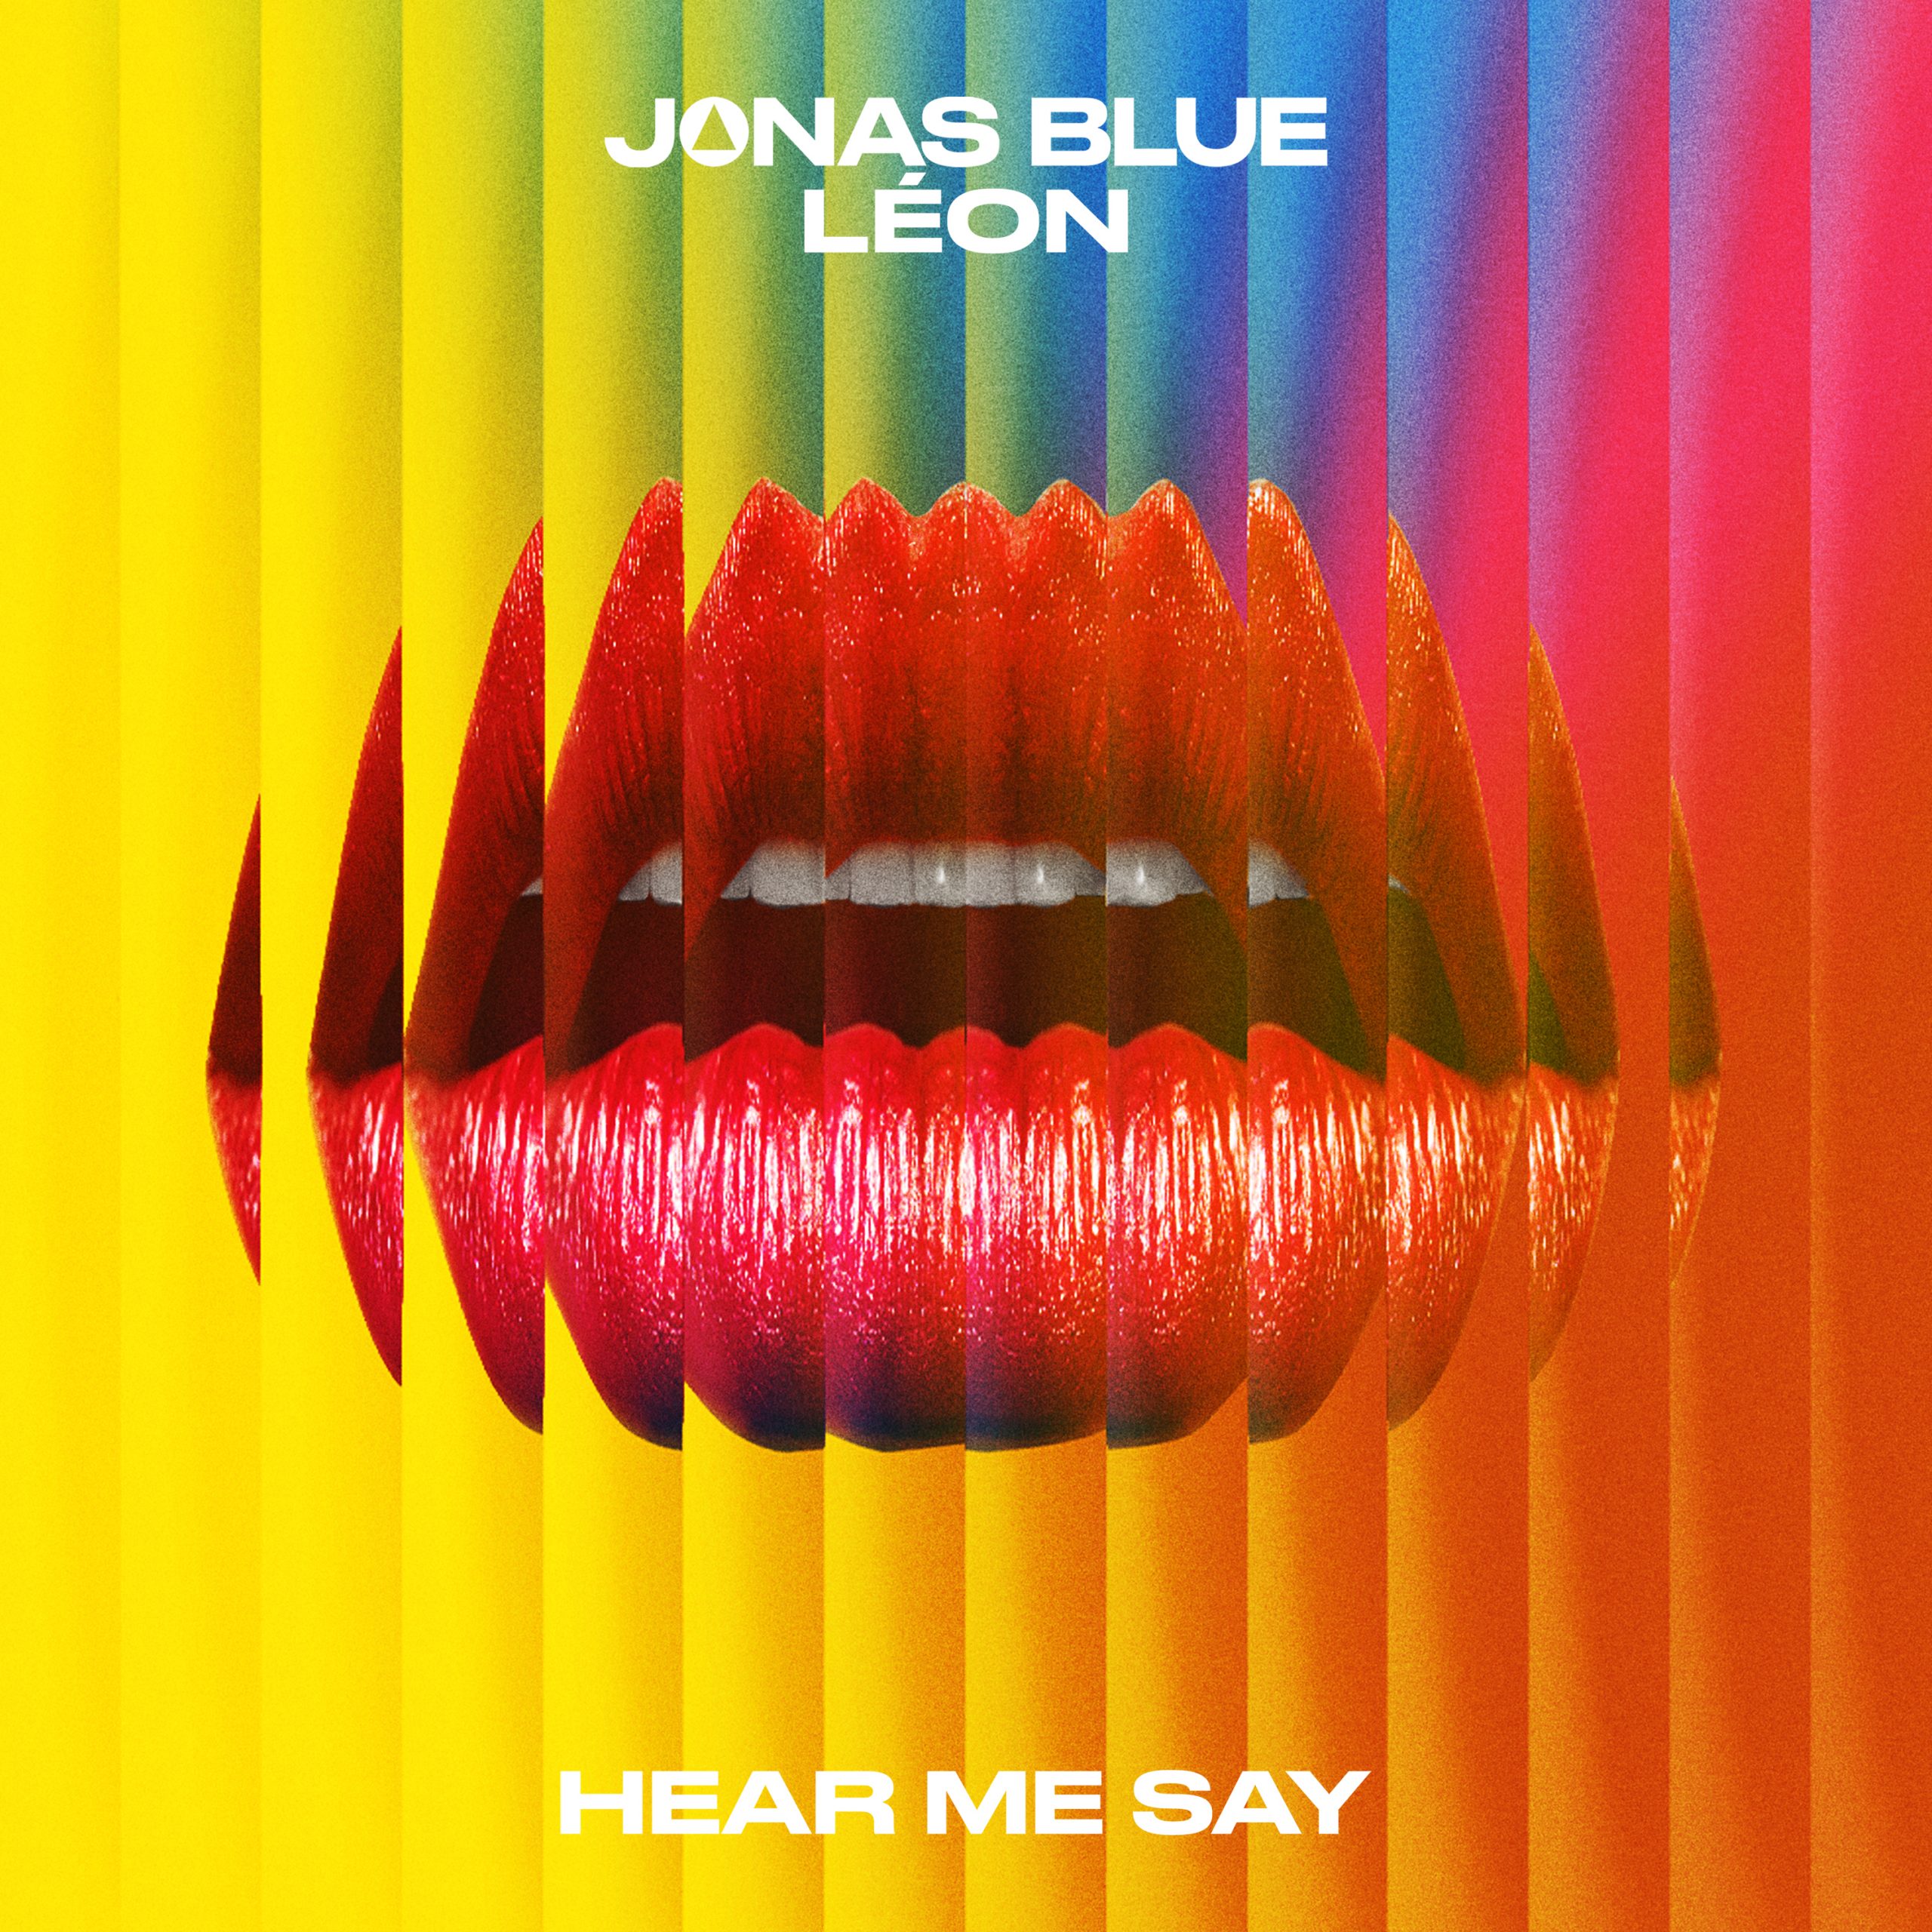 Jonas Blue and LEON - "Hear Me Say" single artwork